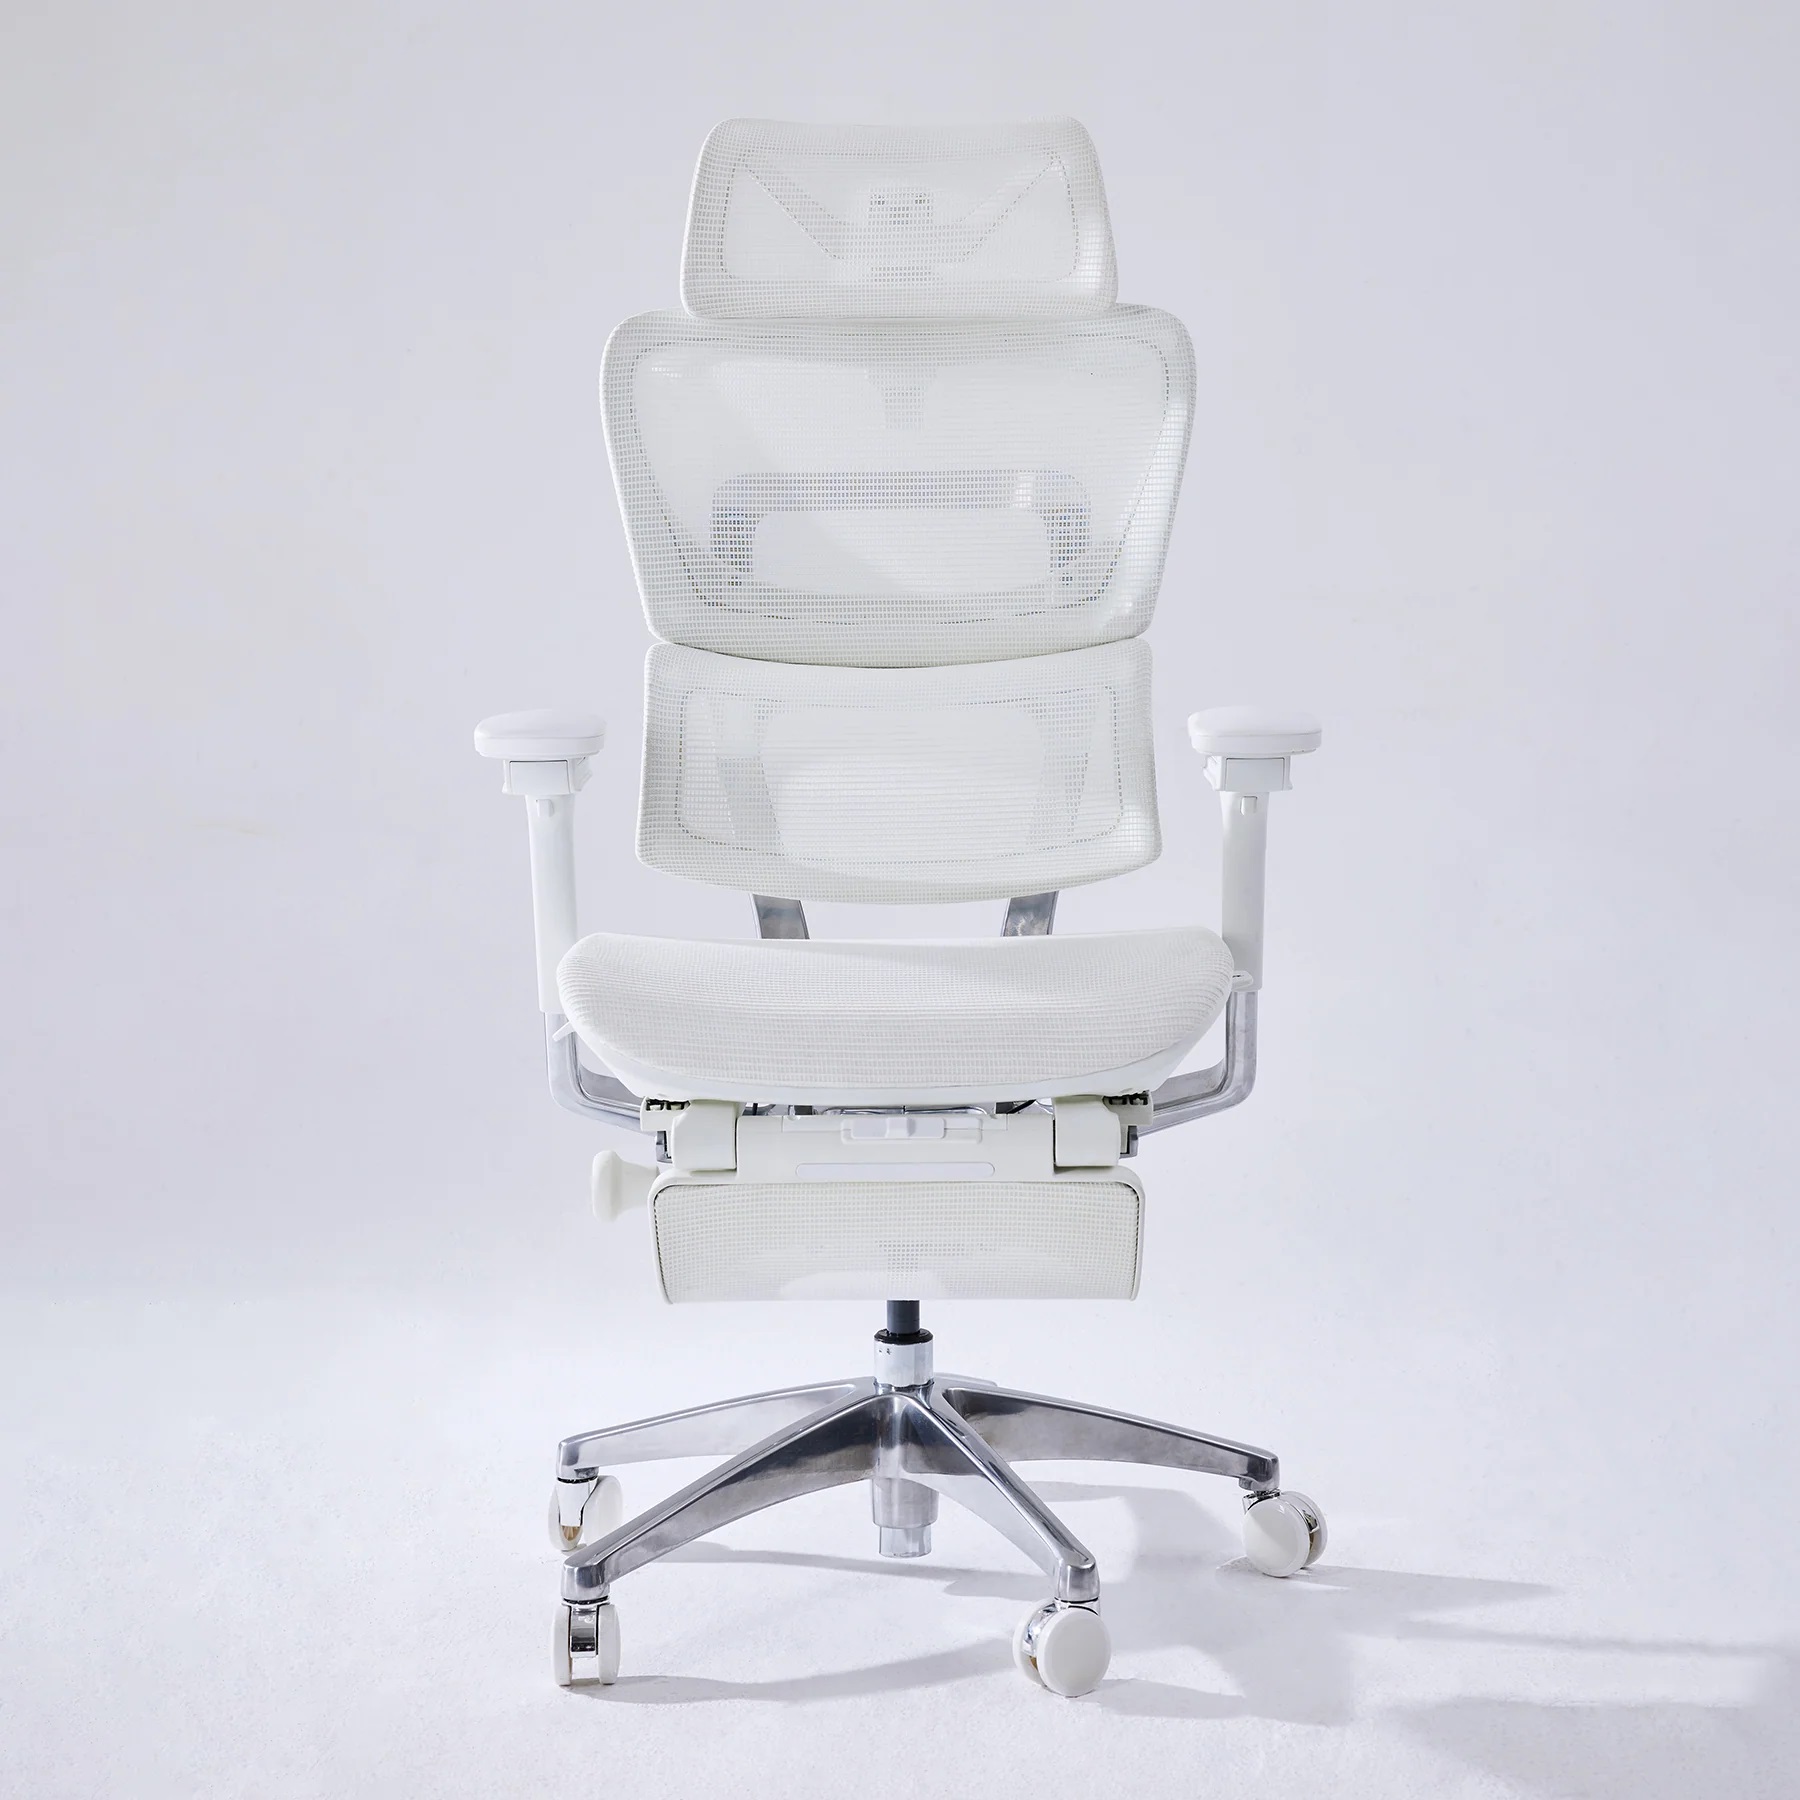 COFO Chairシリーズの新色ホワイトを予約開始 | onesuite